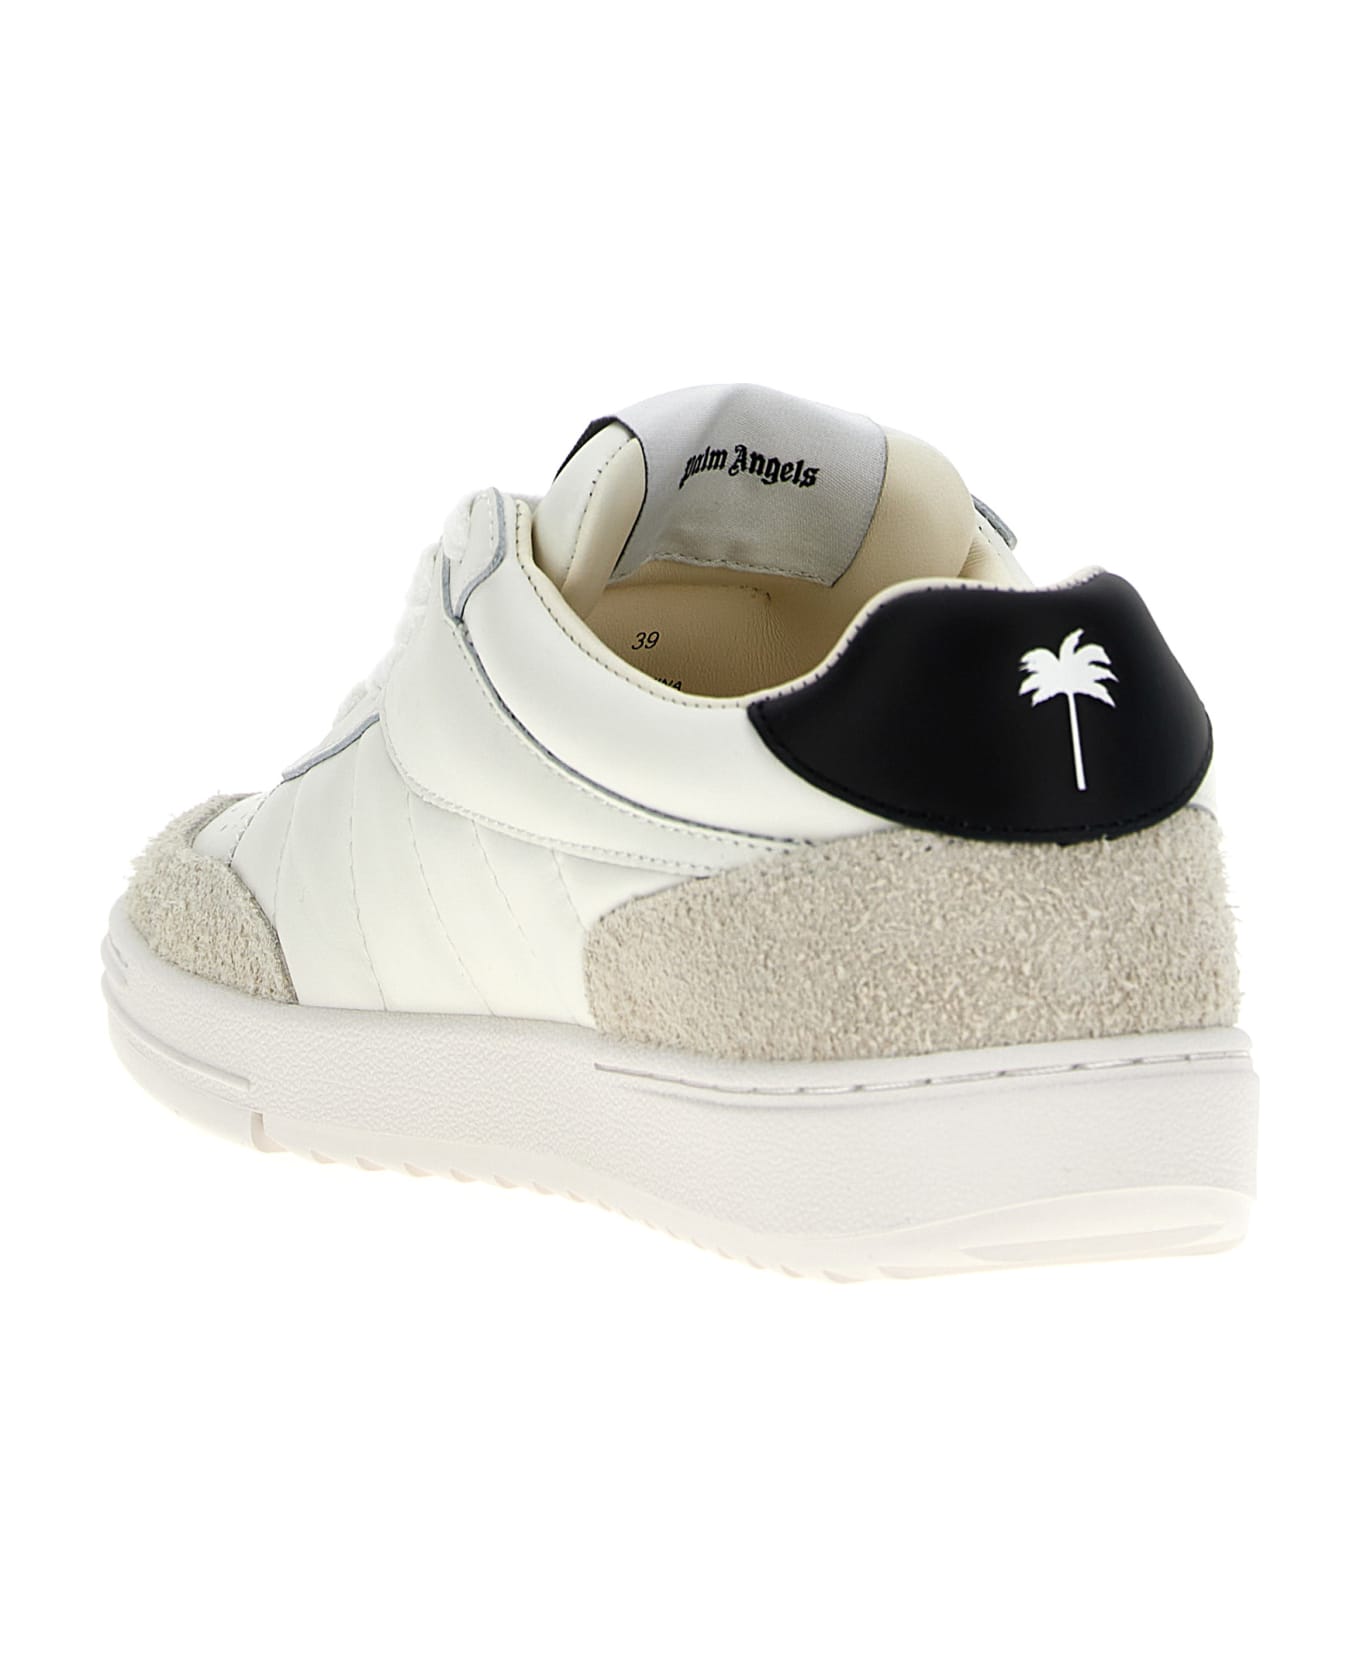 Palm Angels 'palm Beach University' Sneakers - White/Black